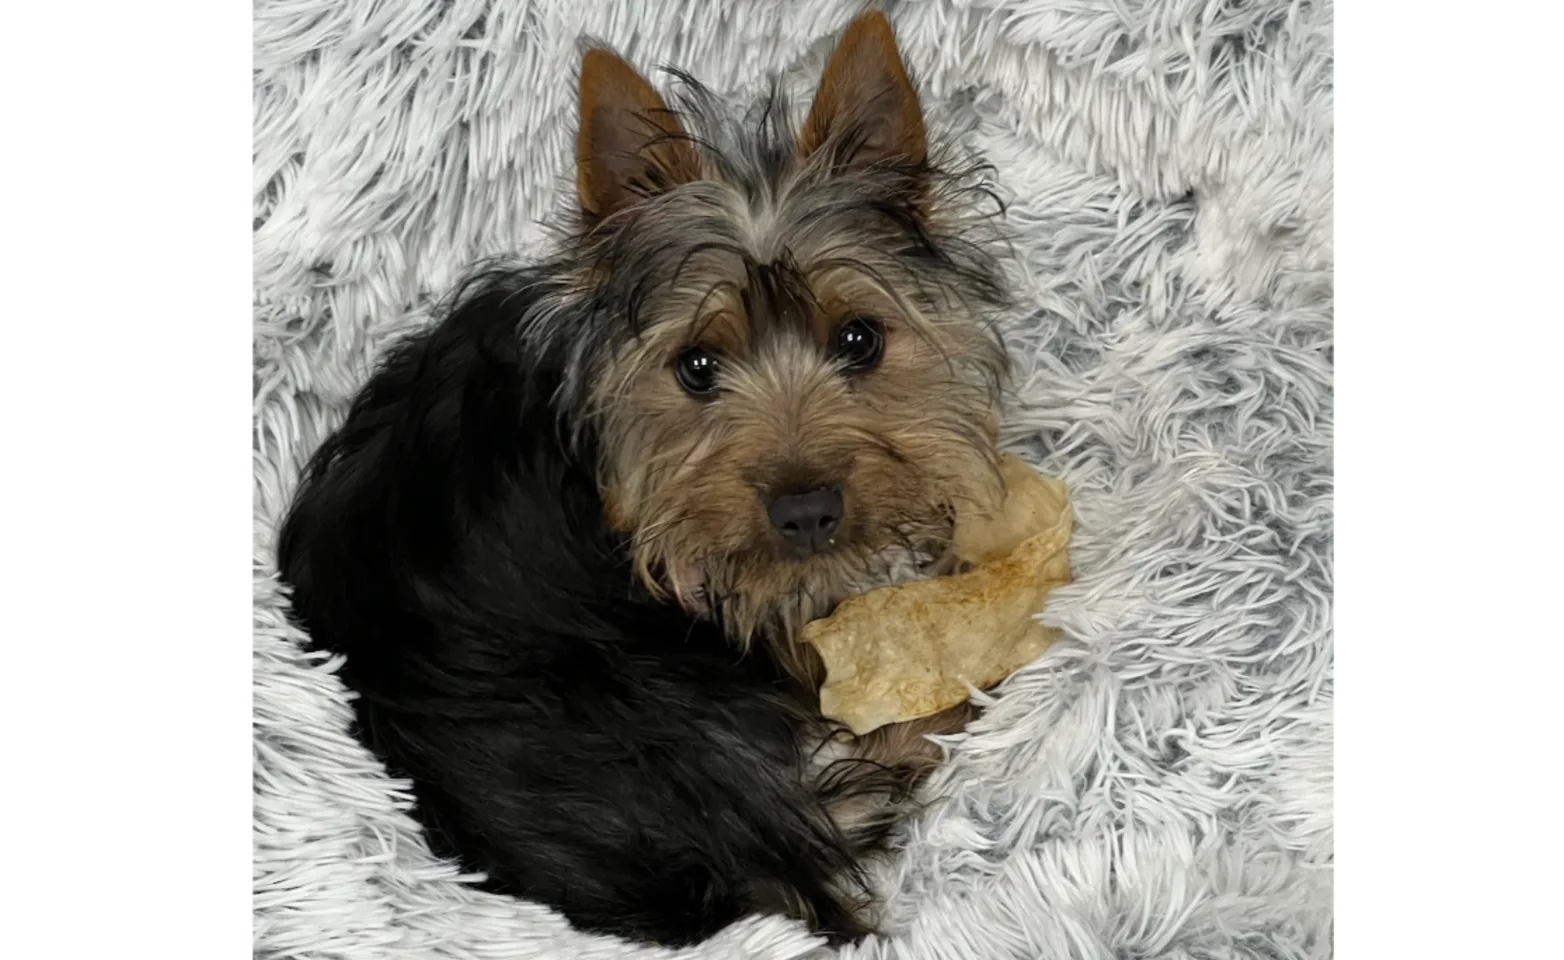 A Yorkie puppy lying on a furry rug